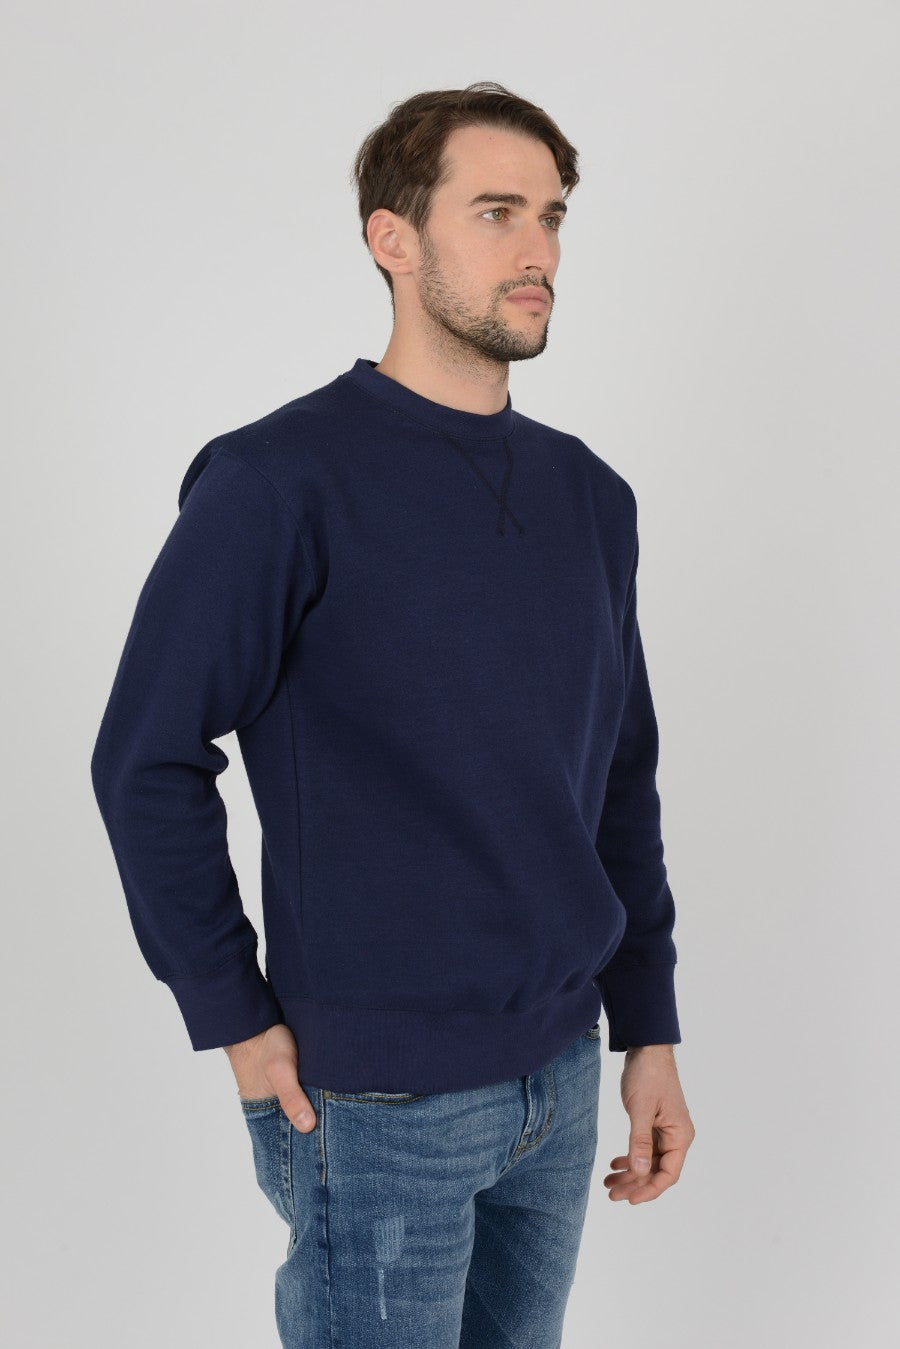 Mens-Plain-Fleece-Sweatshirt-Sweater-Indigo-Blue